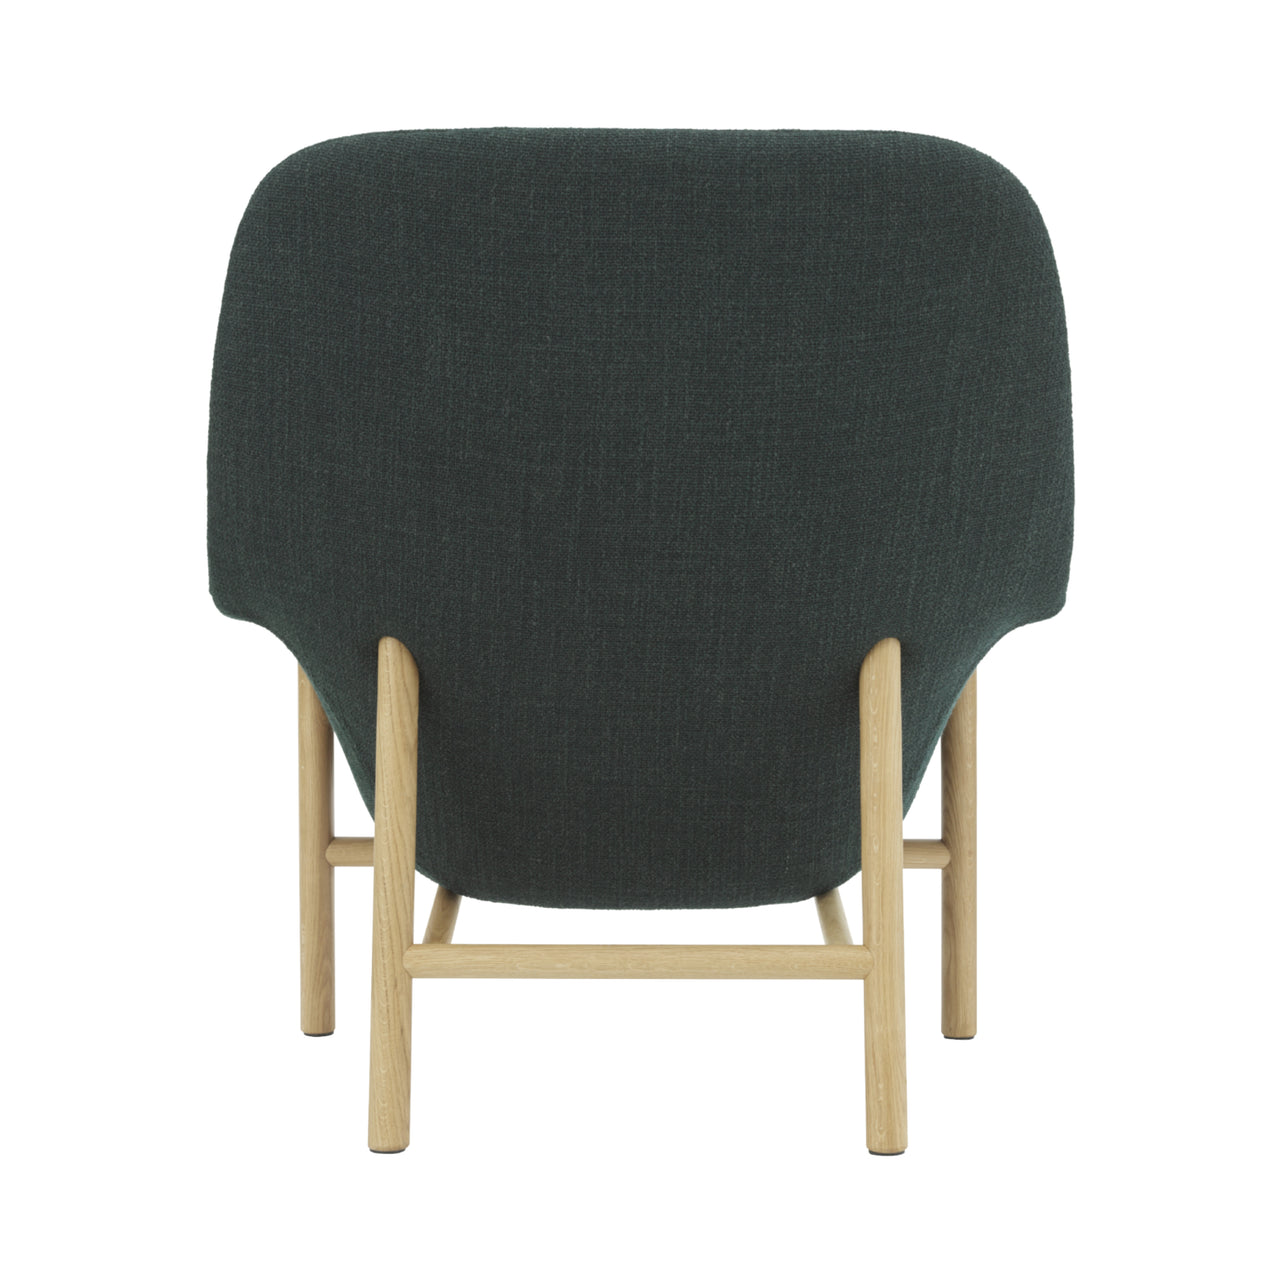 Drape Lounge Chair: High + Wood Base + With Headrest + Oak